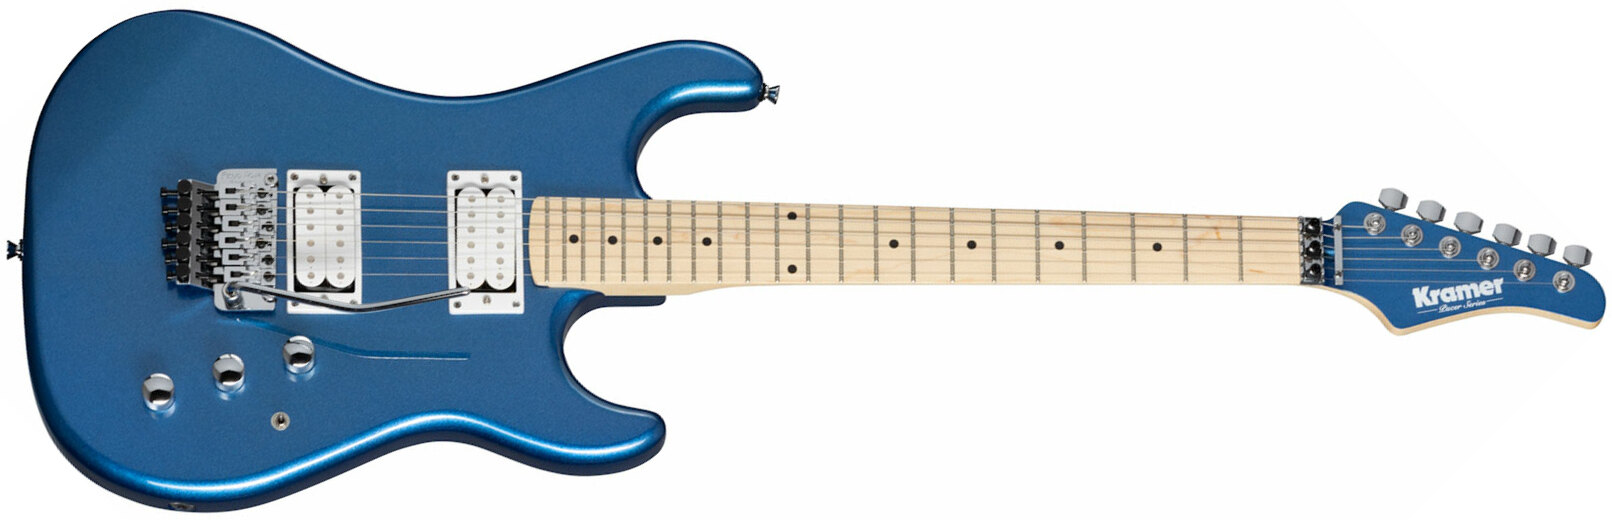 Kramer Pacer Classic 2h Fr Mn - Radio Blue Metallic - Str shape electric guitar - Main picture